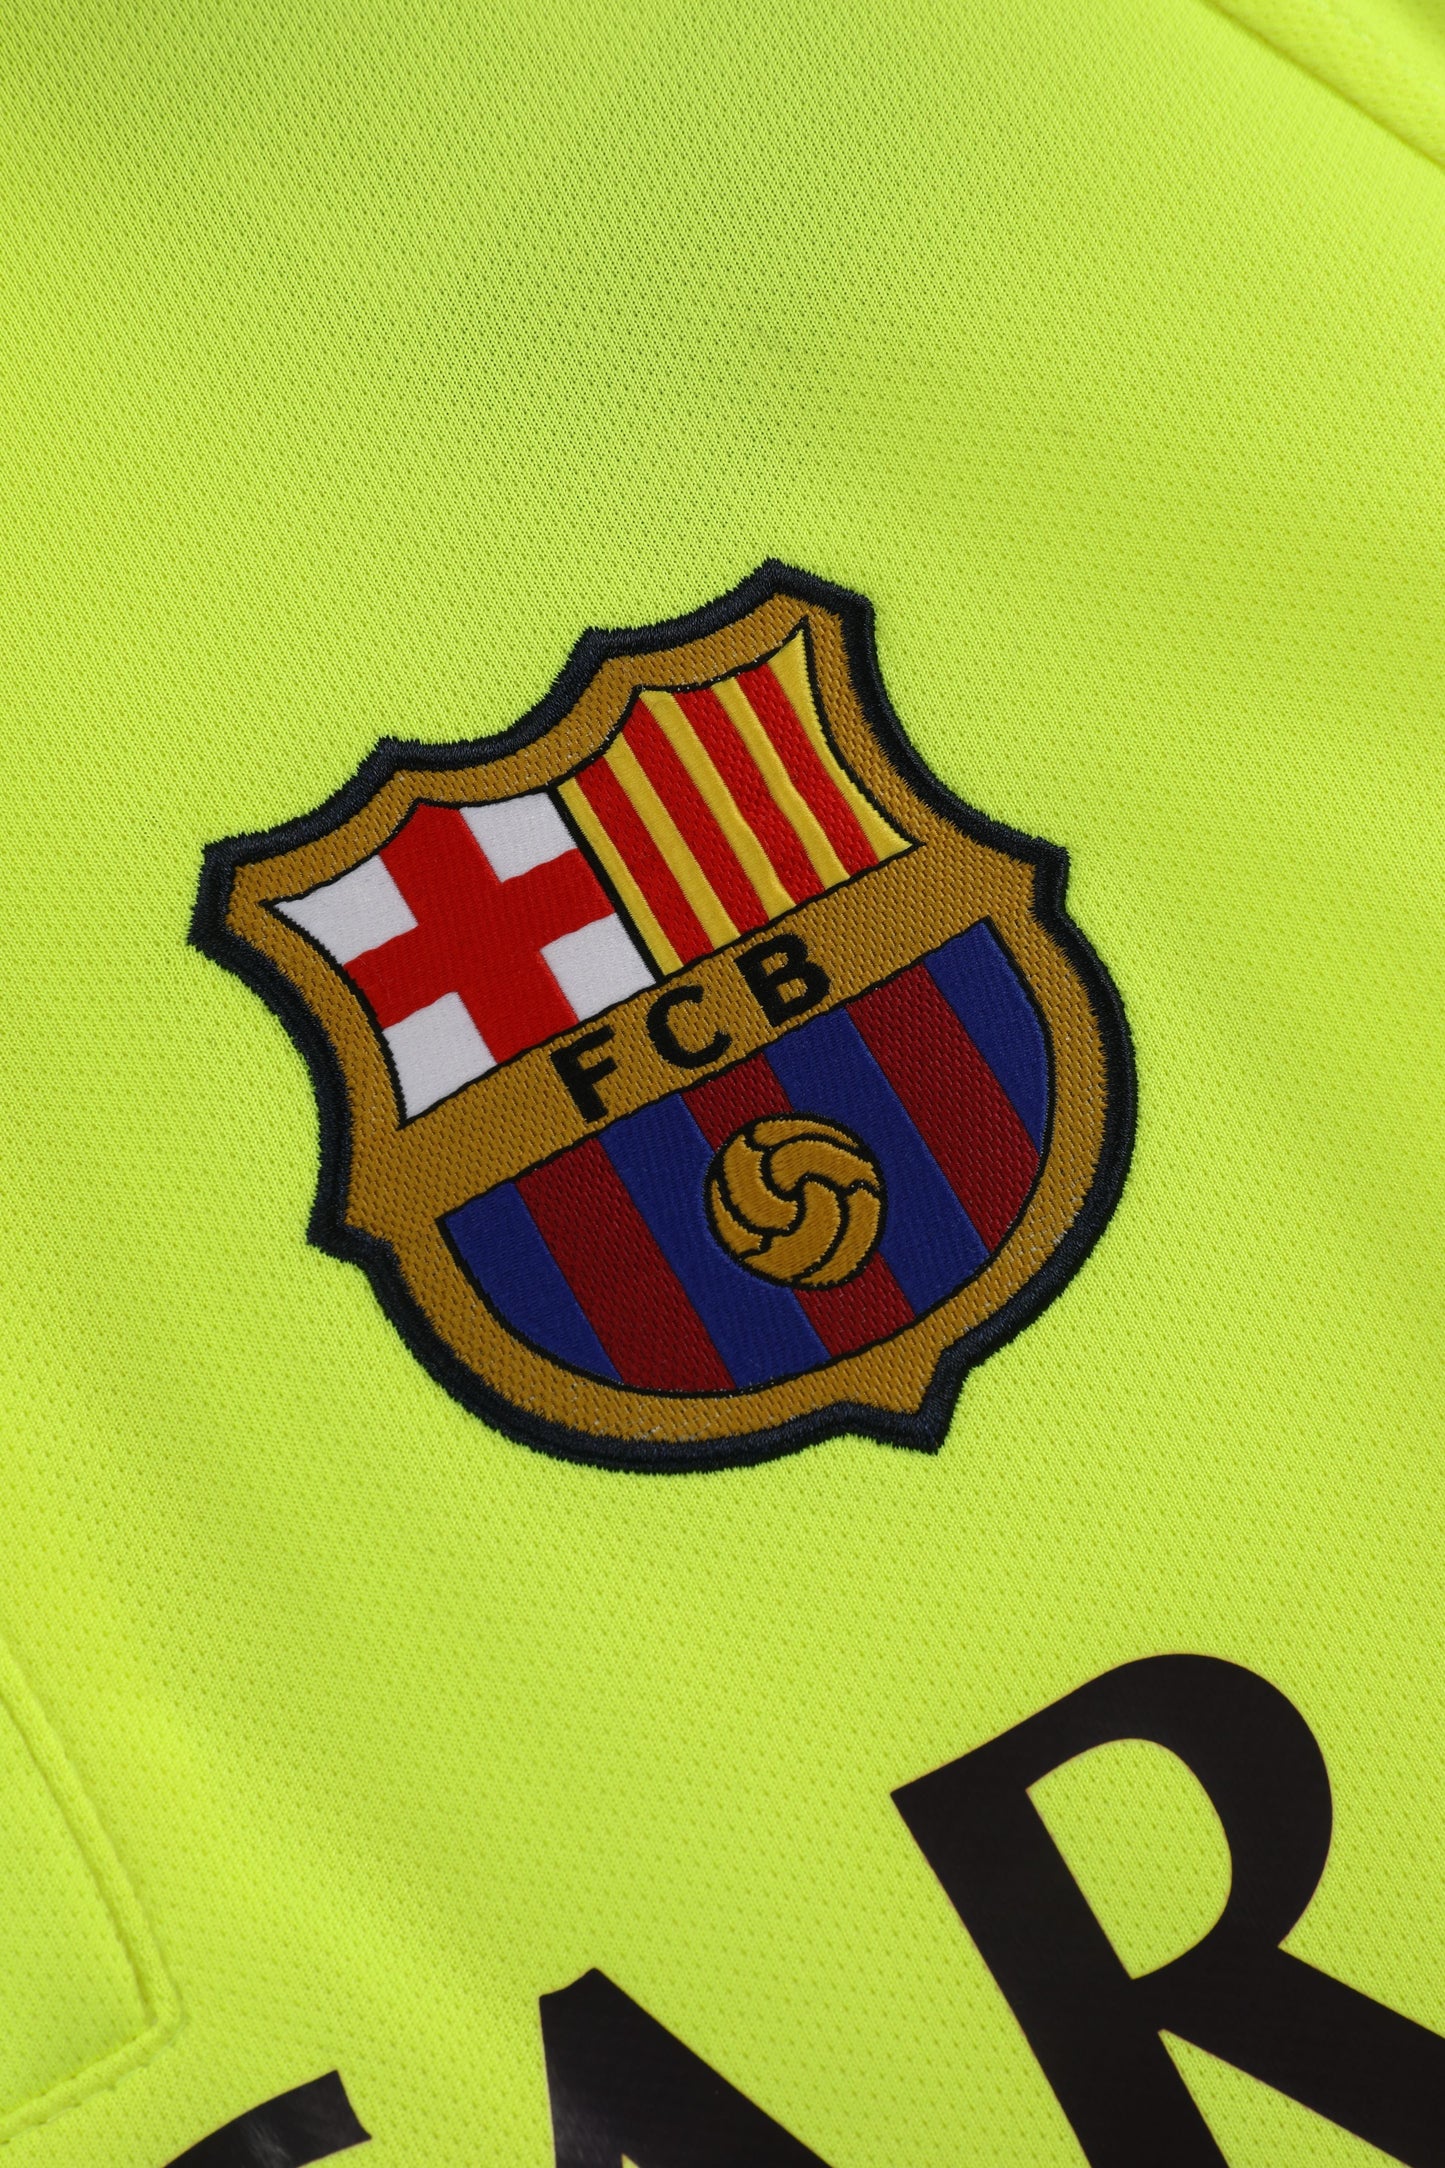 2014/15 Barcelona away games